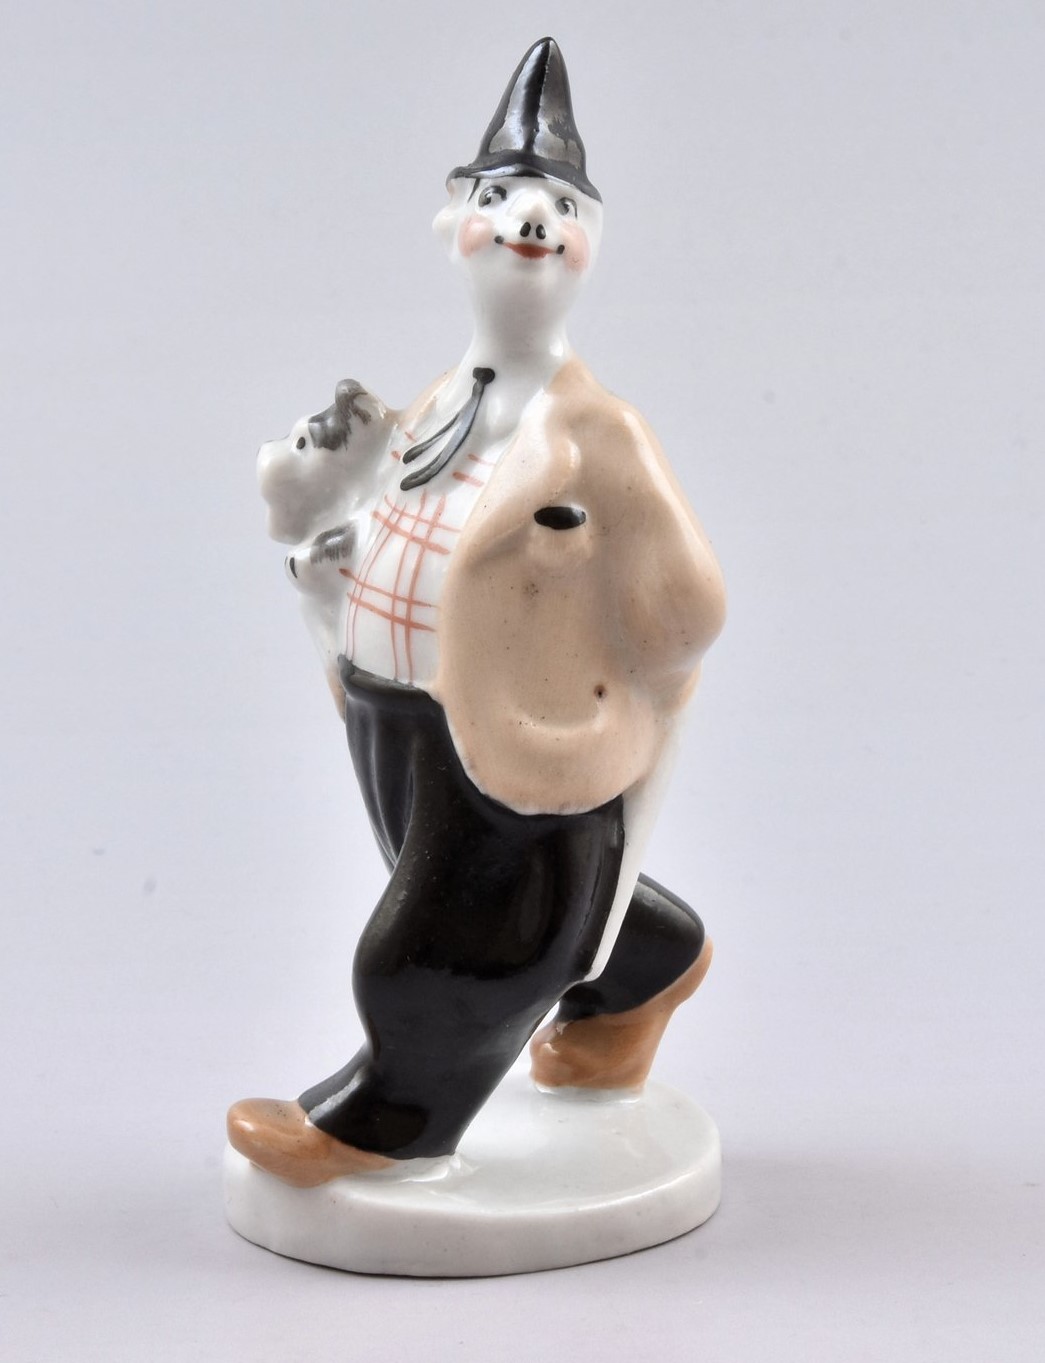 Статуэтка клоун Карандаш с собакой Кляксой фарфор СССР артель Прогресс автор модели А Г Траугот 50е годы